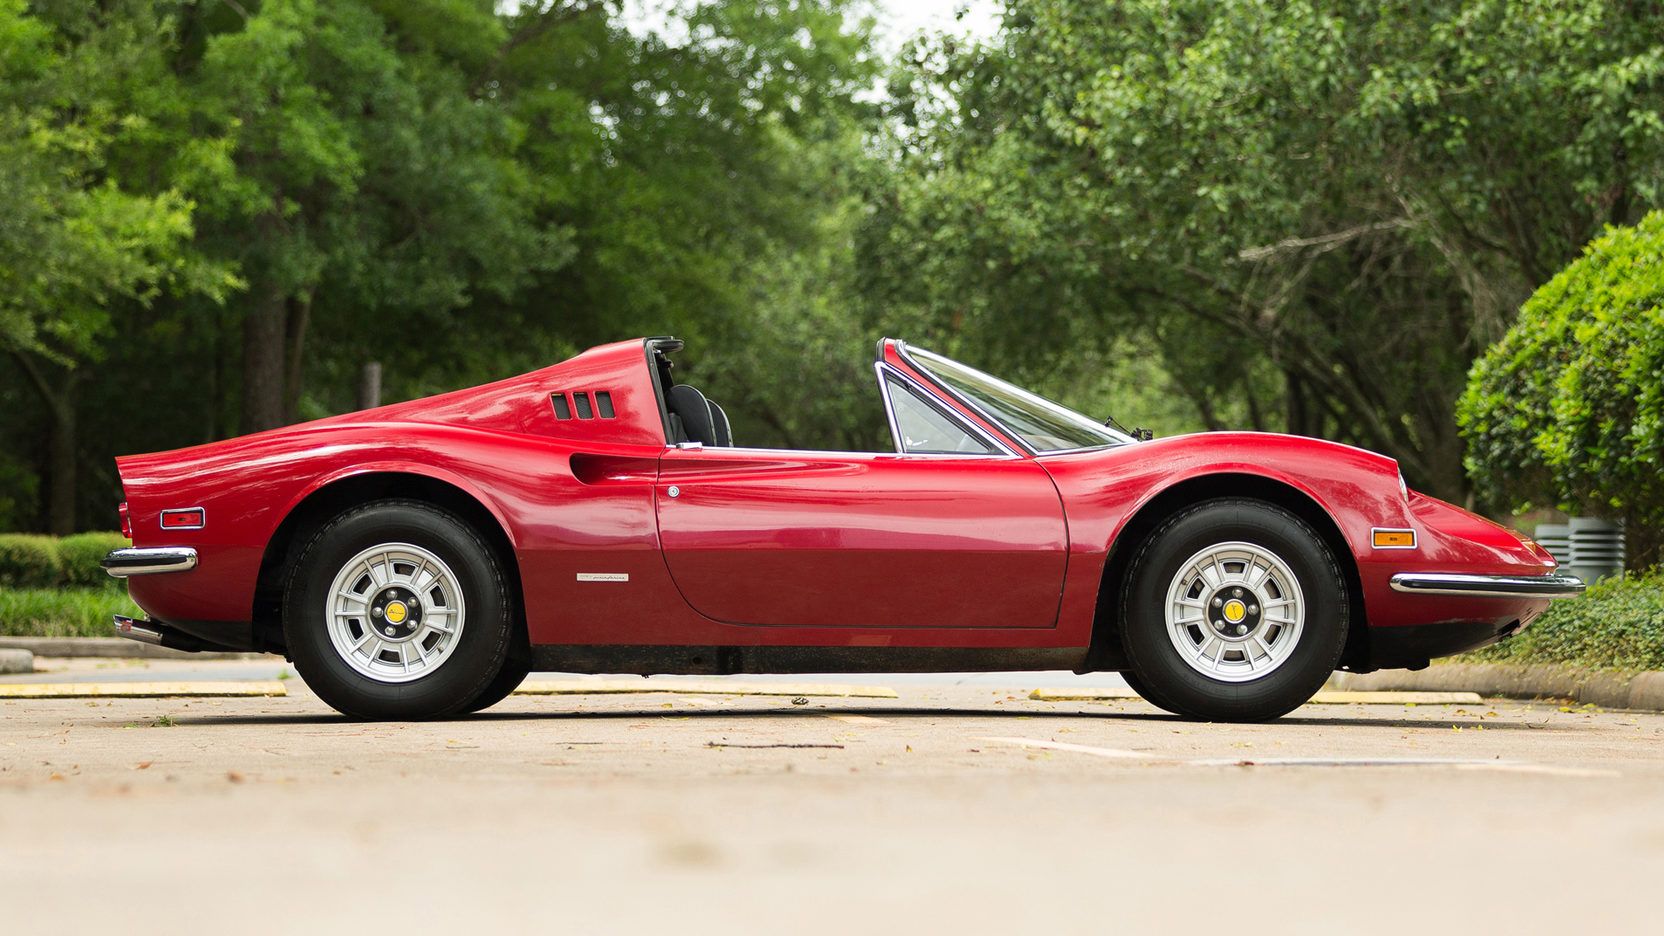 1972 - 1974 Ferrari Dino 246 GTS